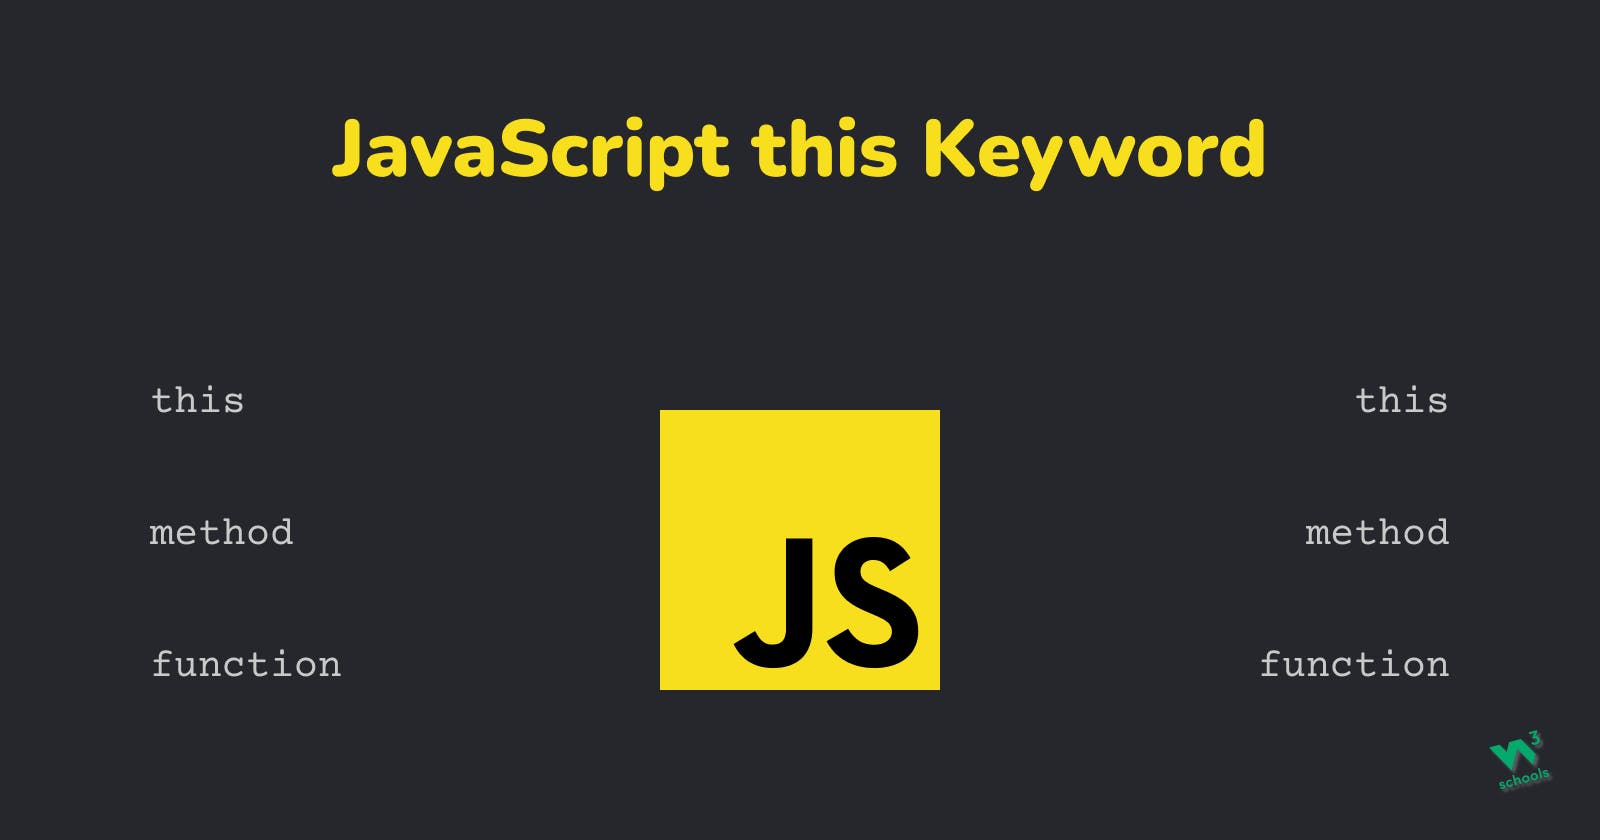 The JavaScript this Keyword